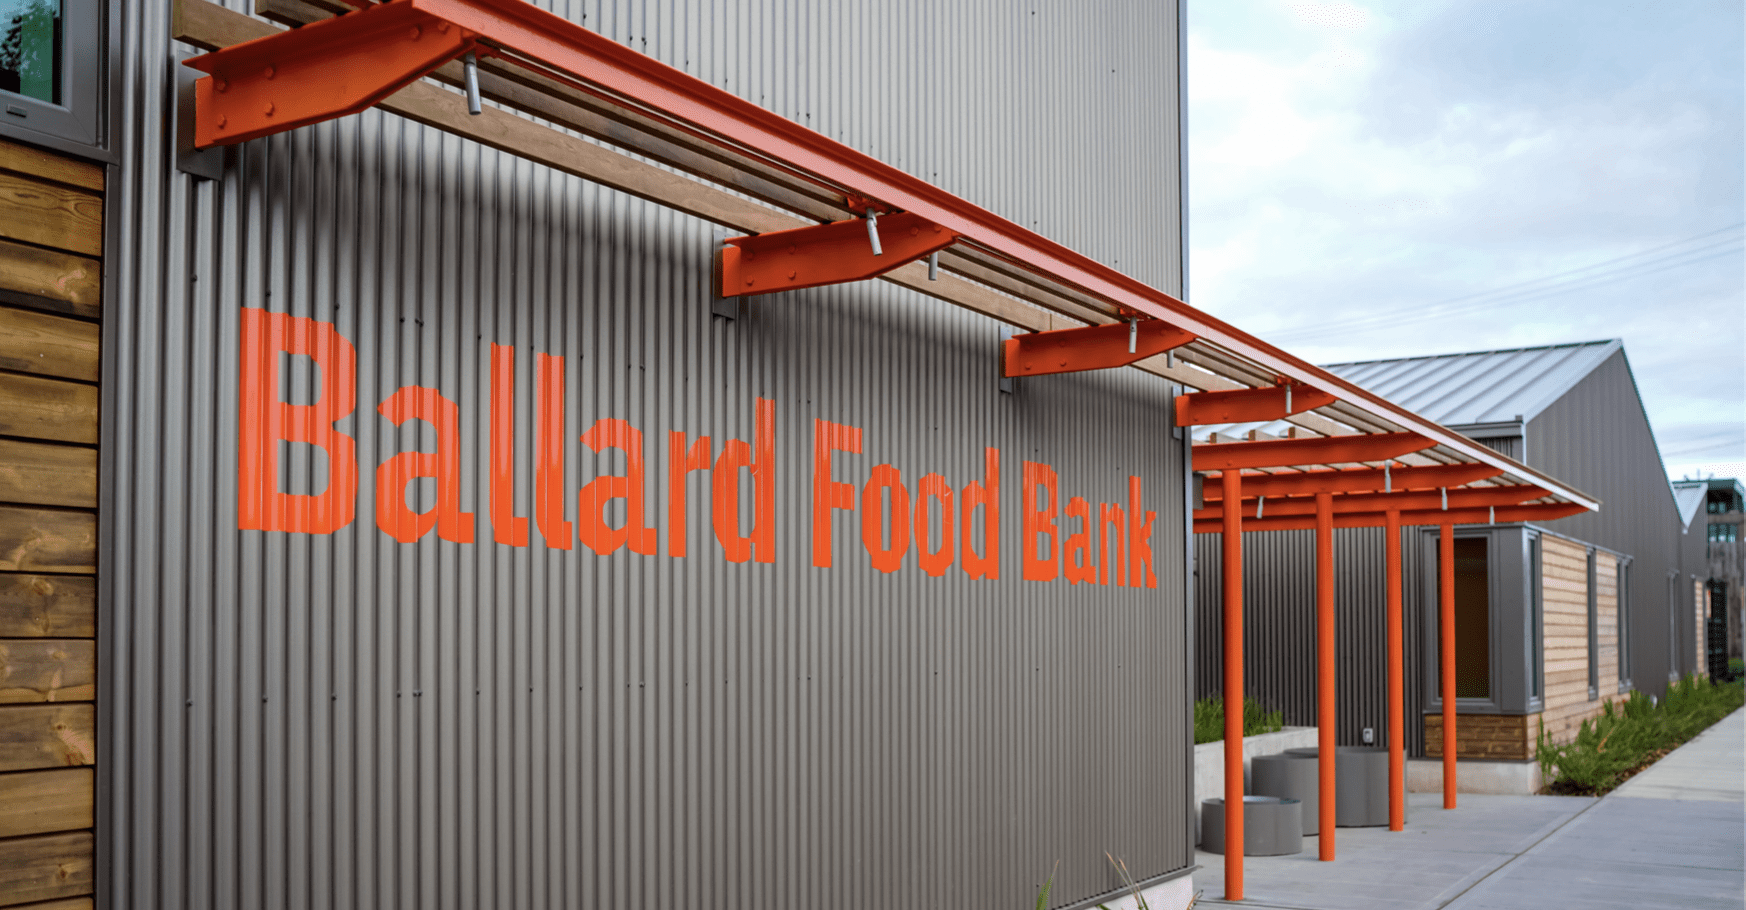 A gray, textured wall reads "Ballard Food Bank" in orange letters